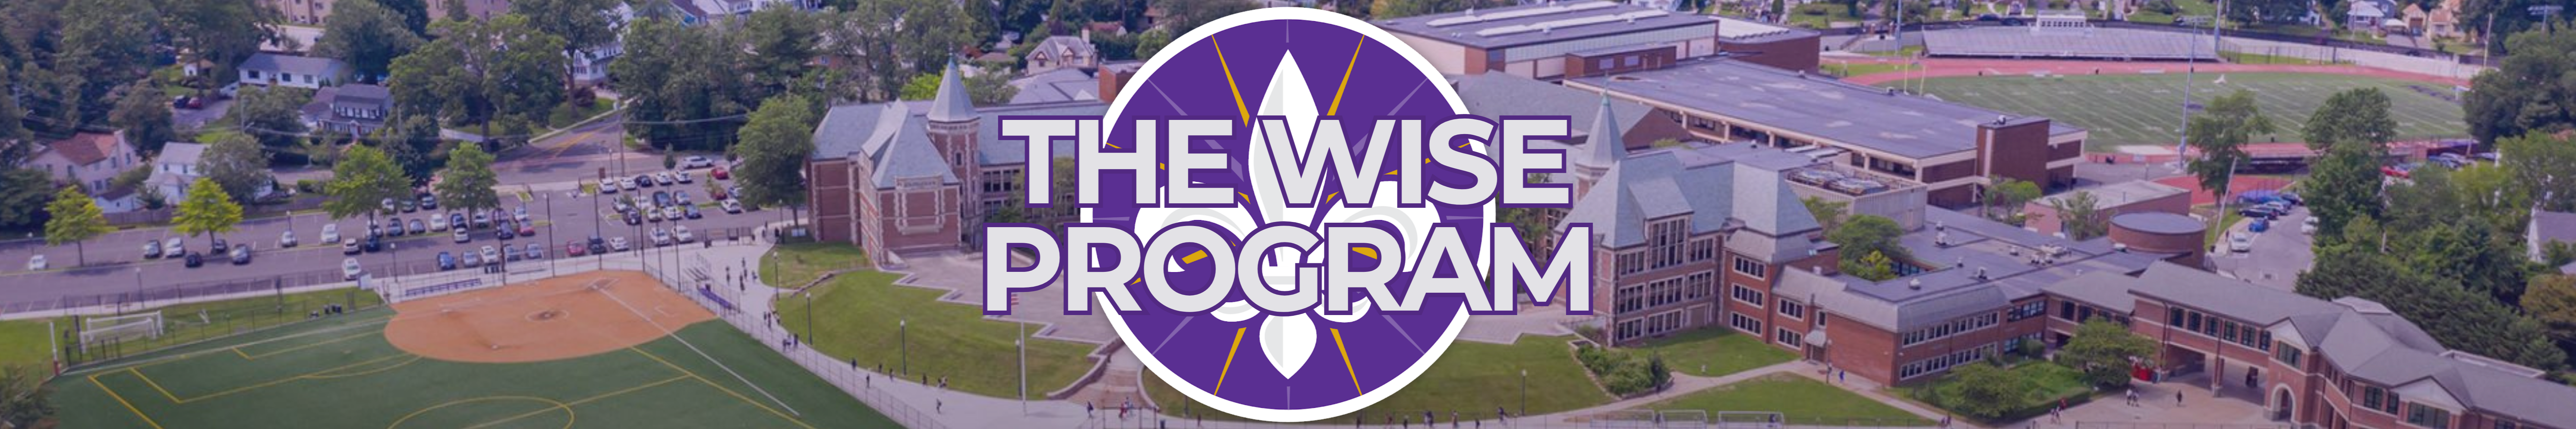 The WISE Program banner